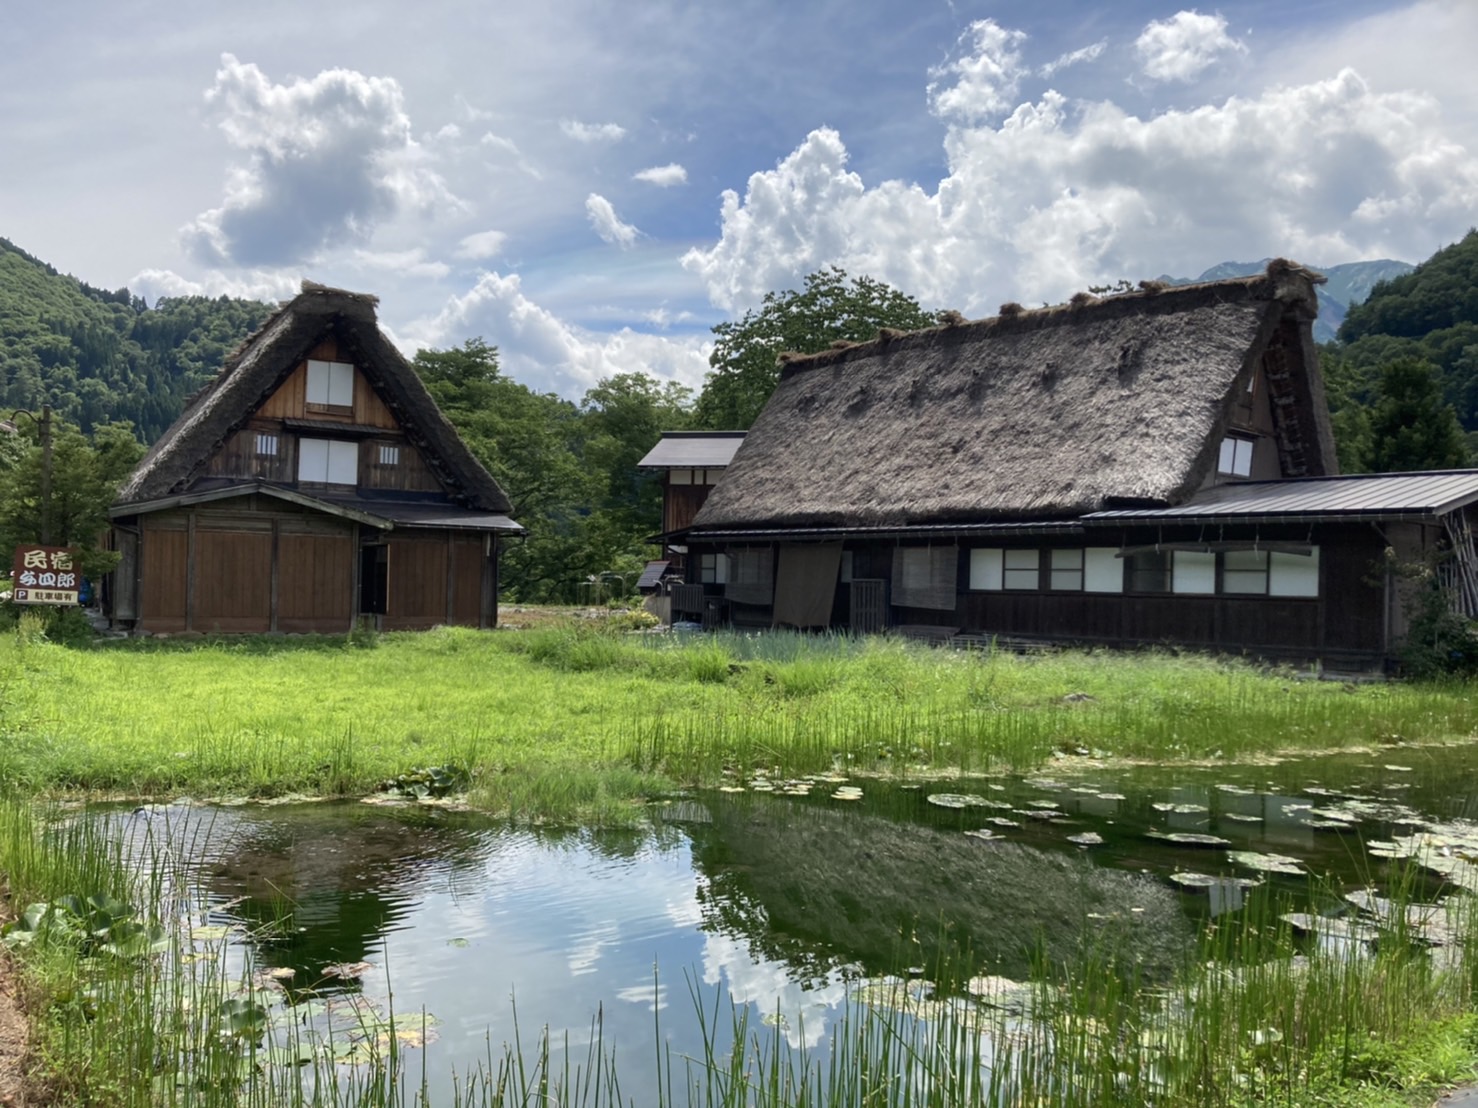 [3-in-1] Shirakawa-go, Gujo Hachiman, & Takayama Historical Tour from Nagoya